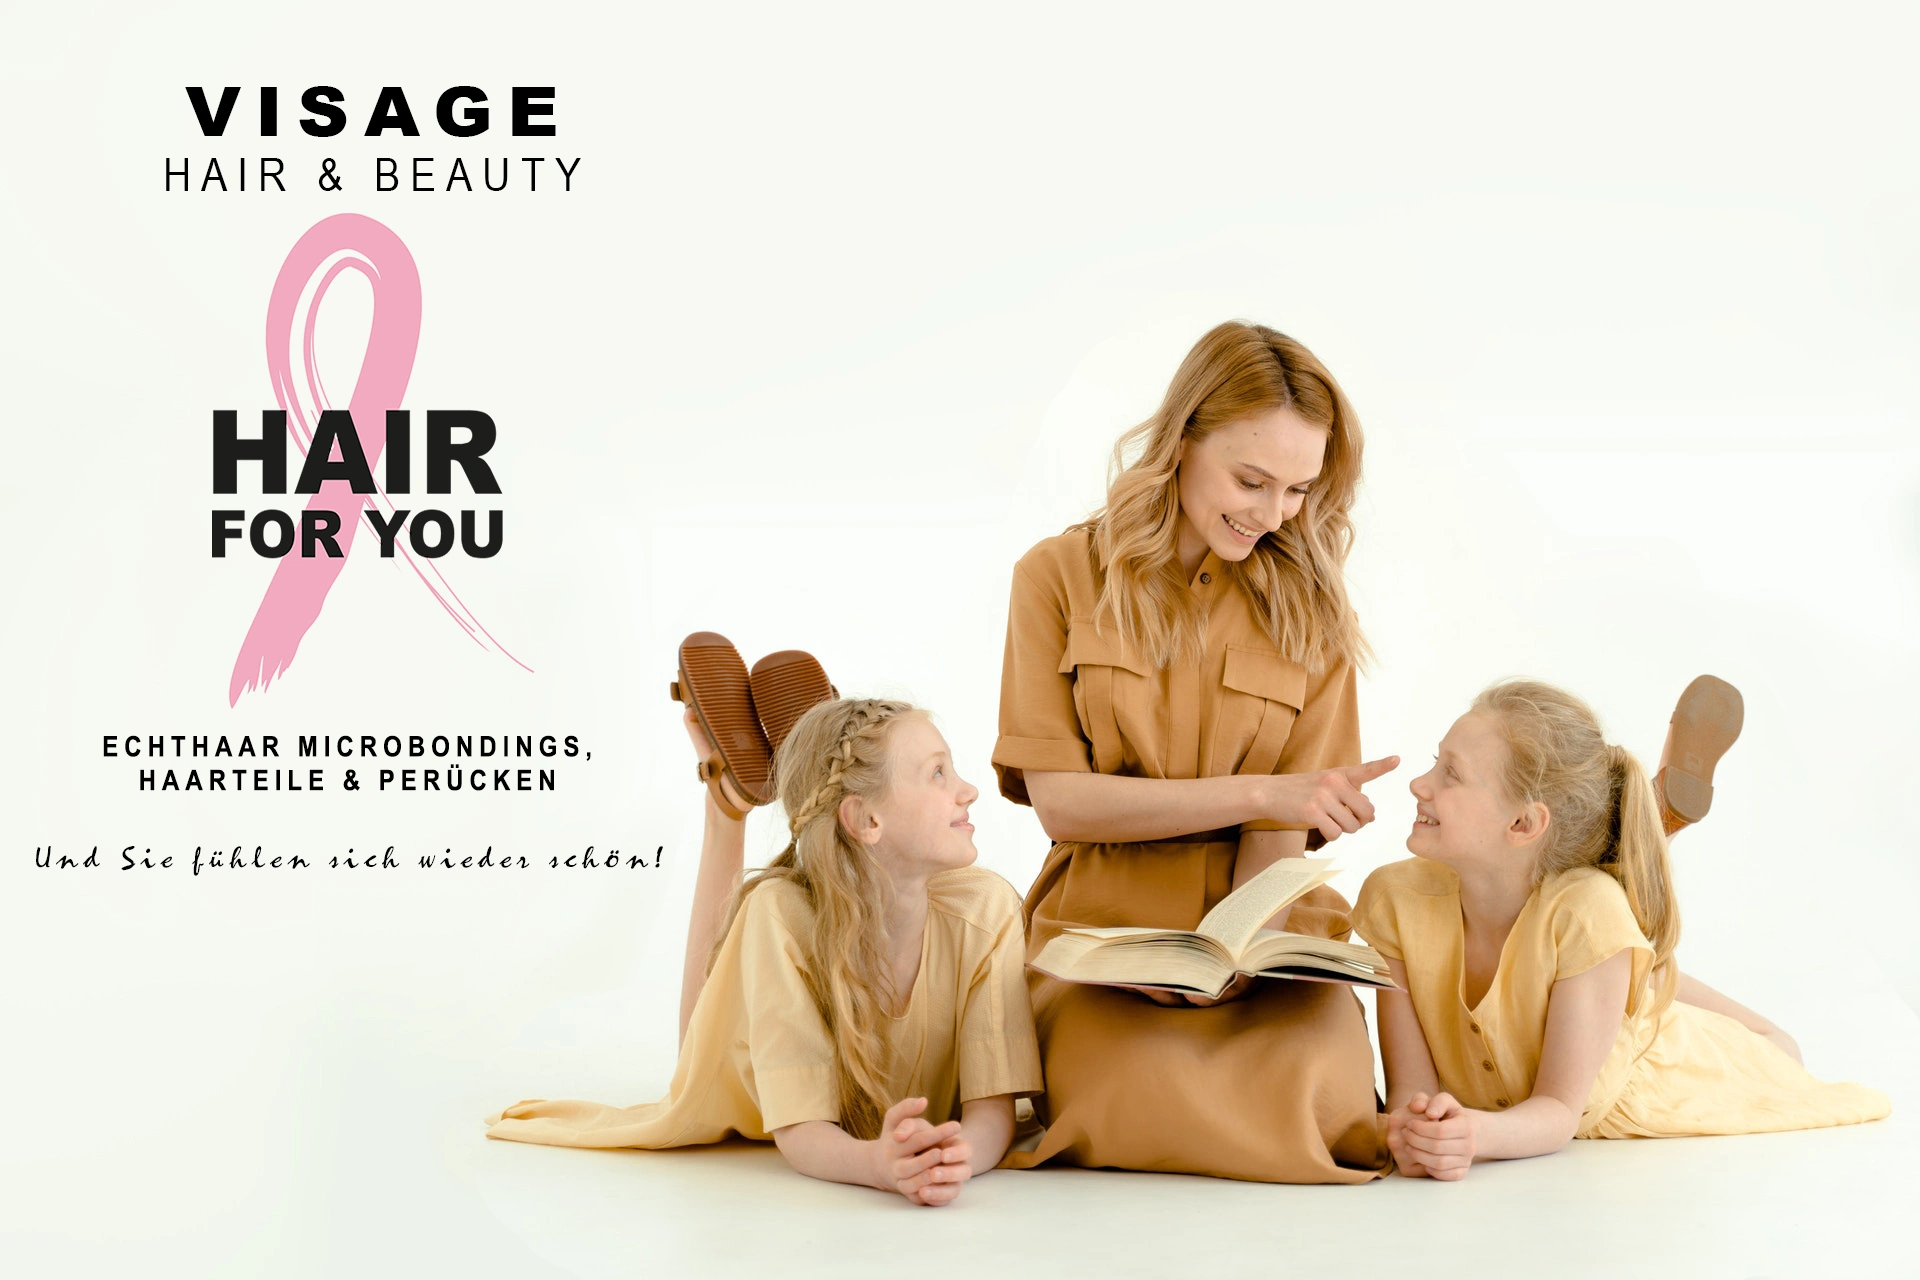 Hair for You - Echthaarperücken München - by VISAGE Hair & Beauty